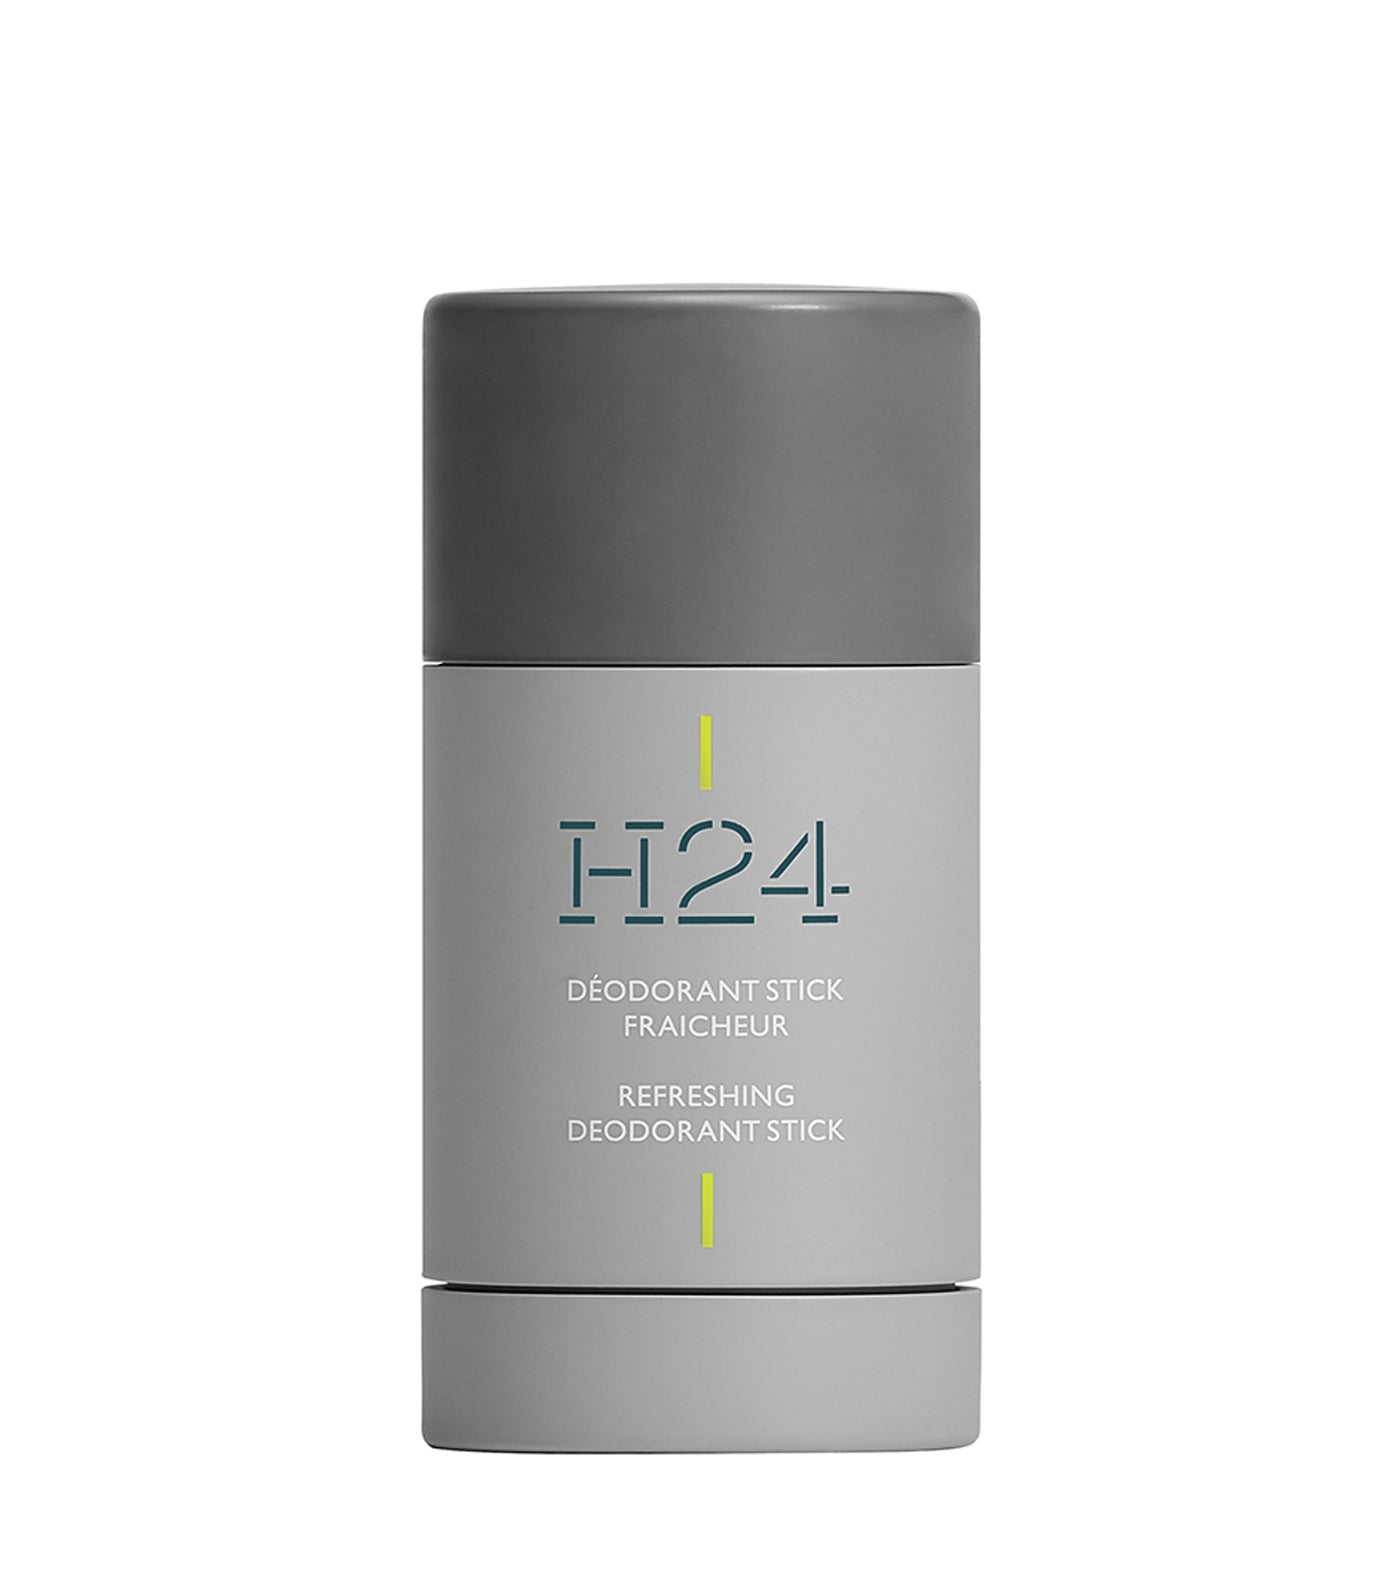 H24, refreshing stick deodorant 75ml